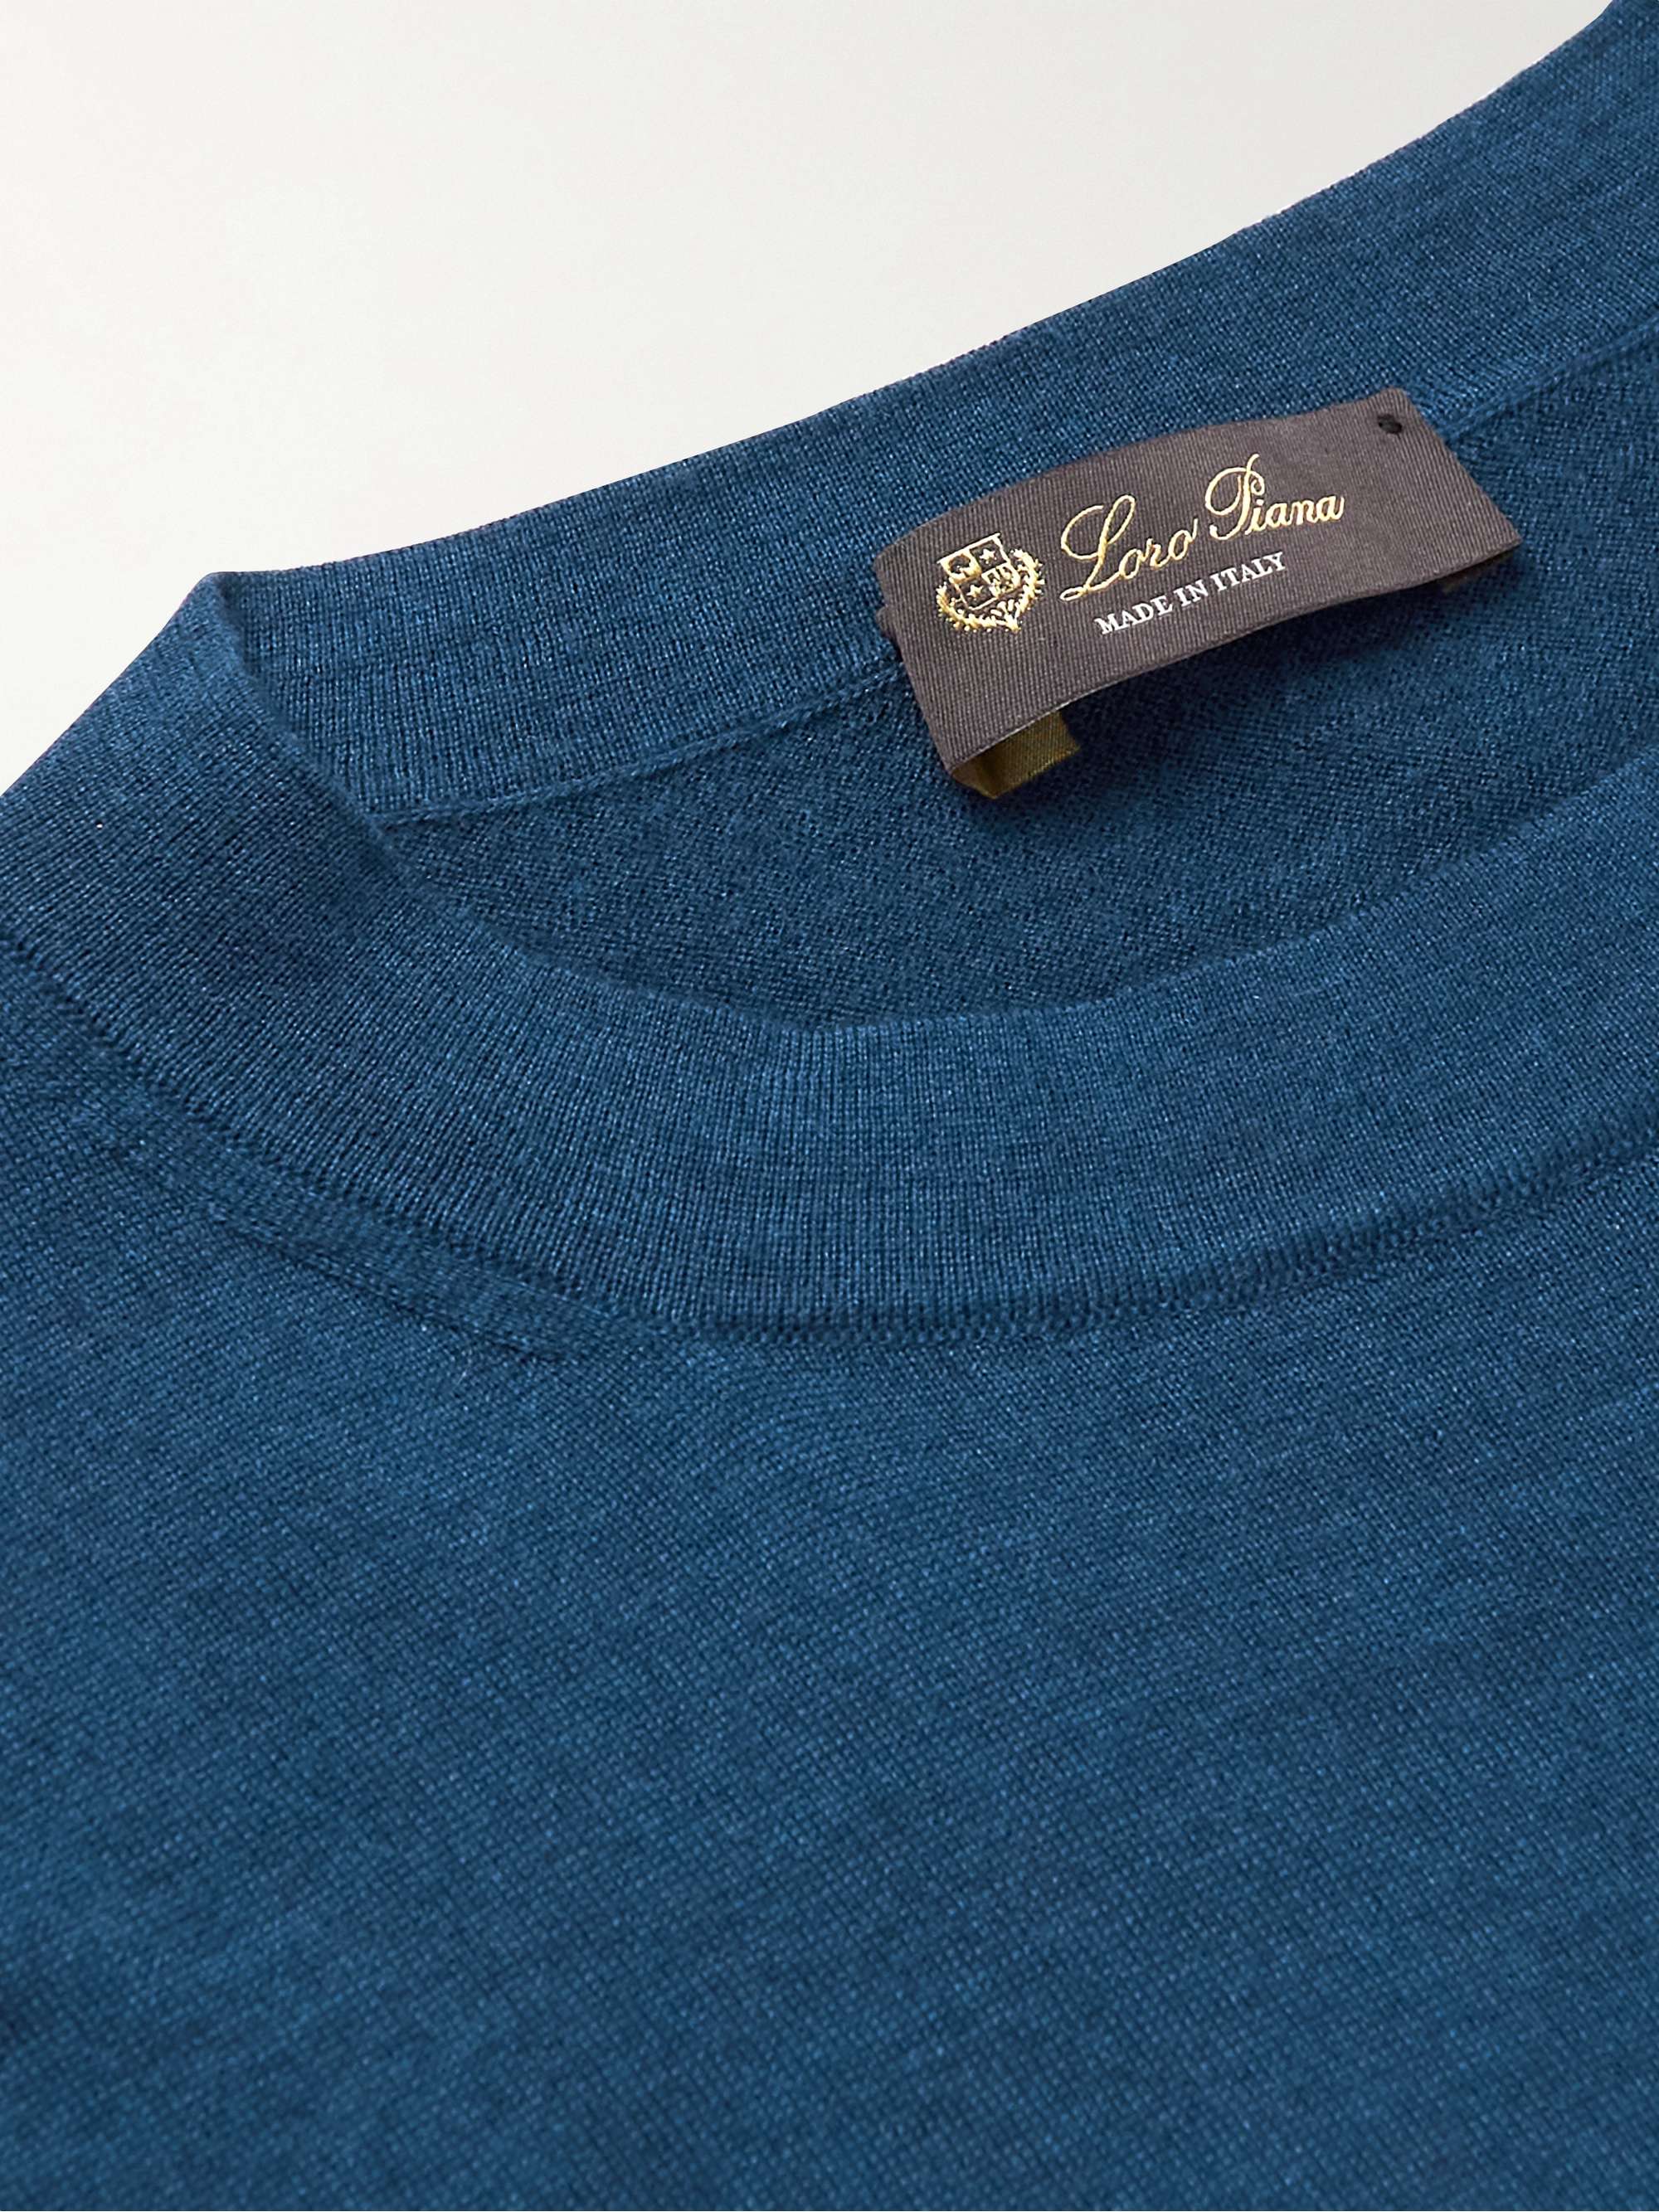 LORO PIANA Cashmere and Silk-Blend Sweater